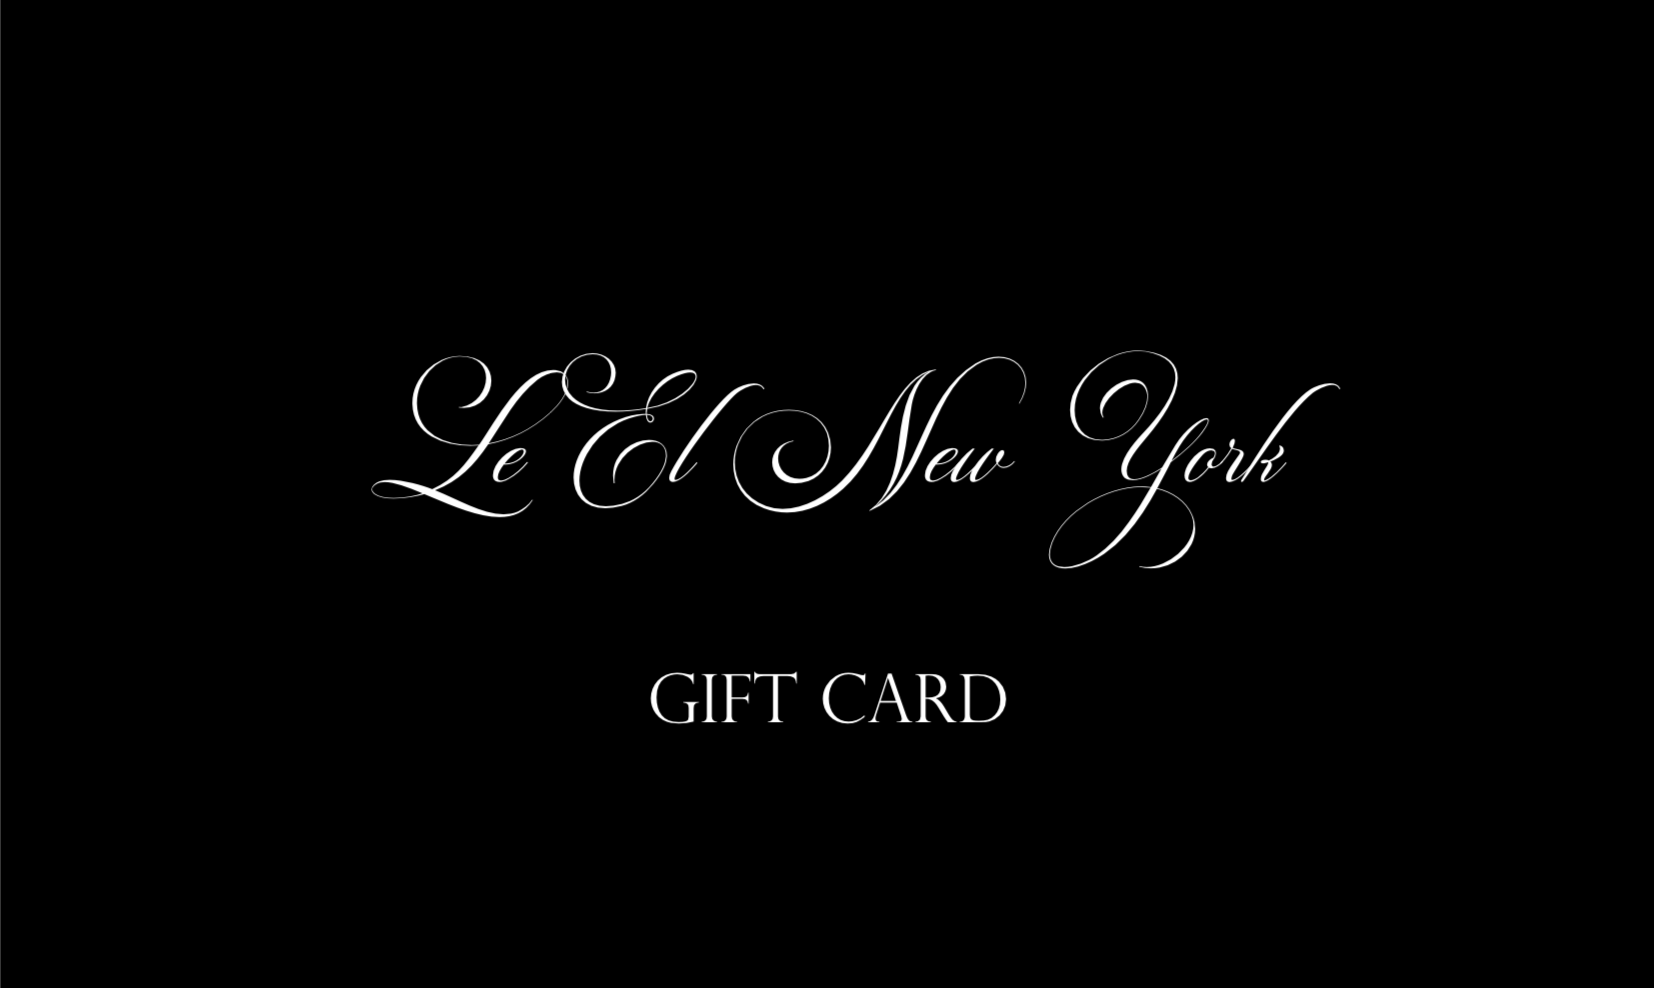 Gift Card - LE EL New York